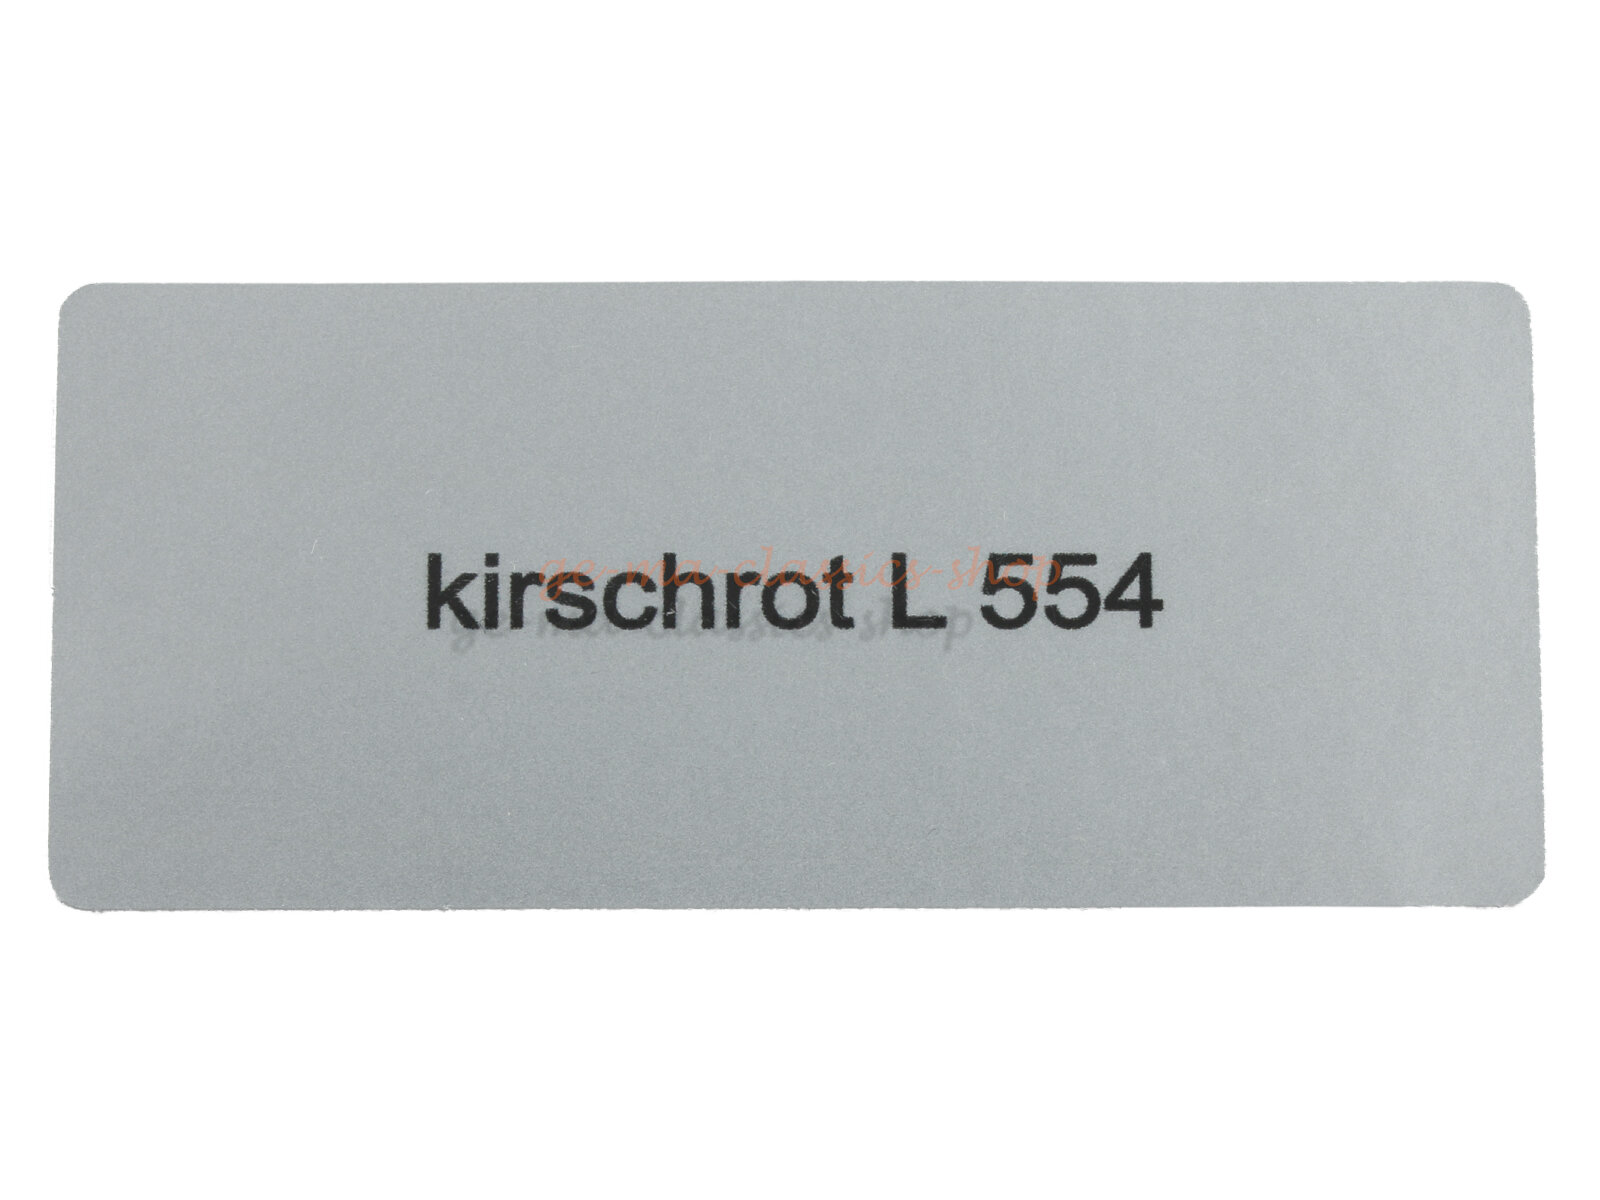 Aufkleber "kirschrot L 554" Farbcode Sticker